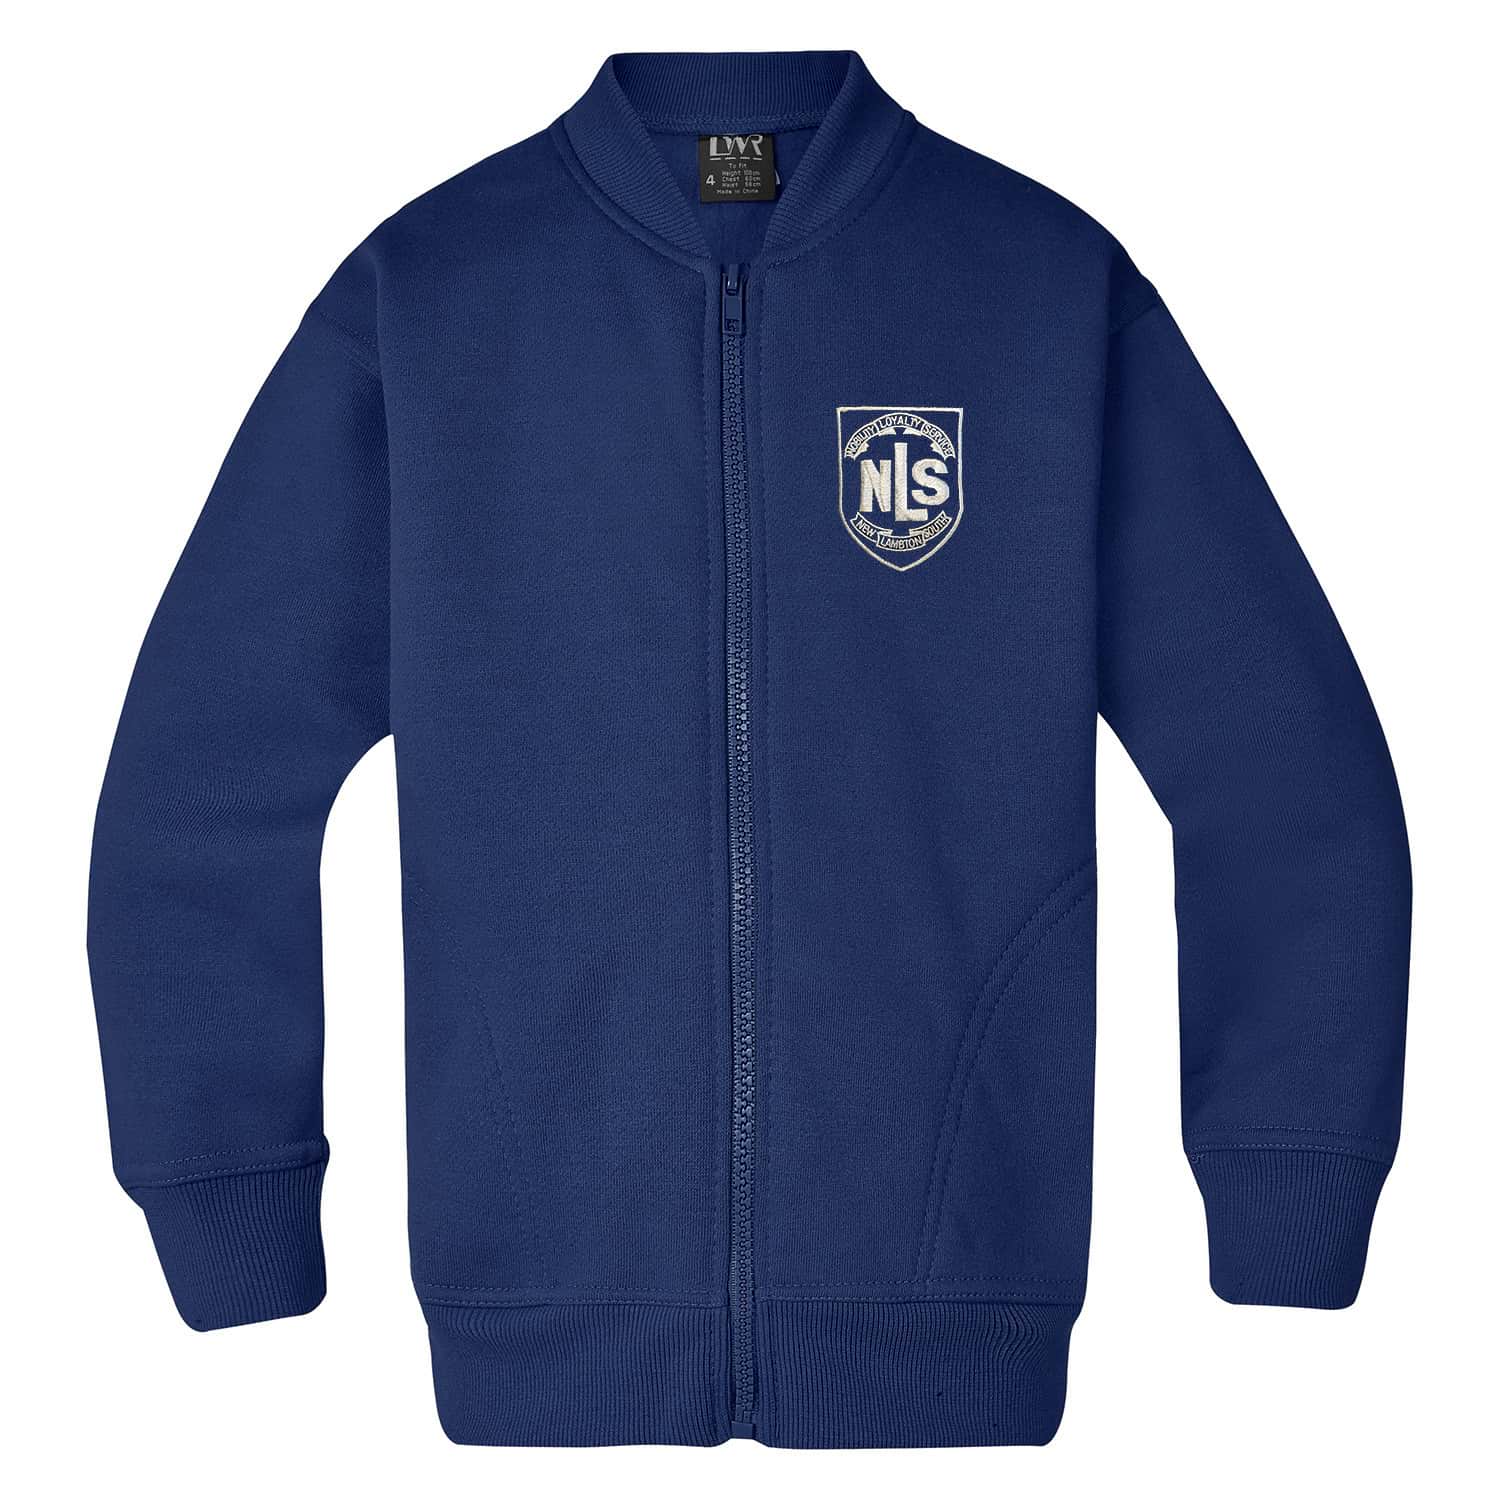 Image of NLS Jacket - Zip Fleece